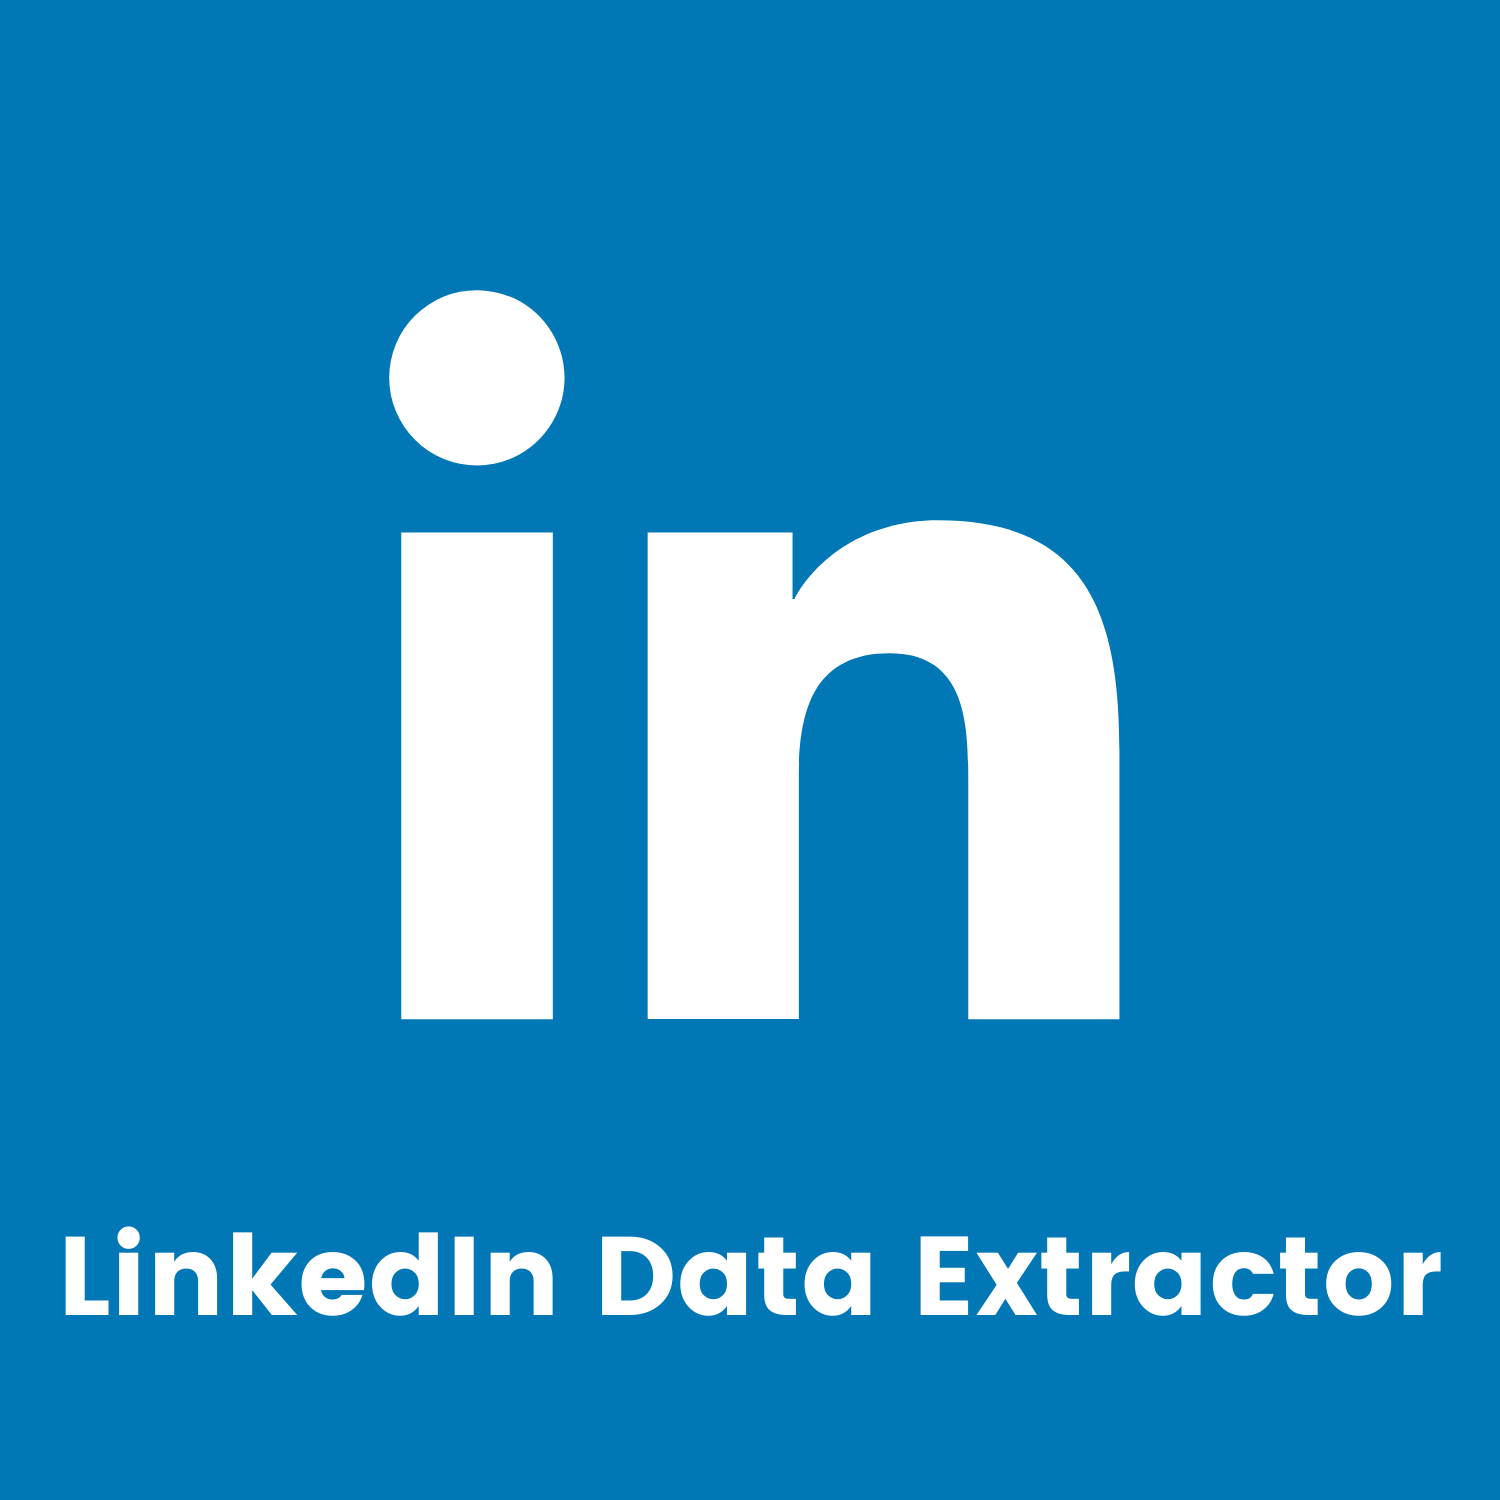 LinkedIn Data Extractor